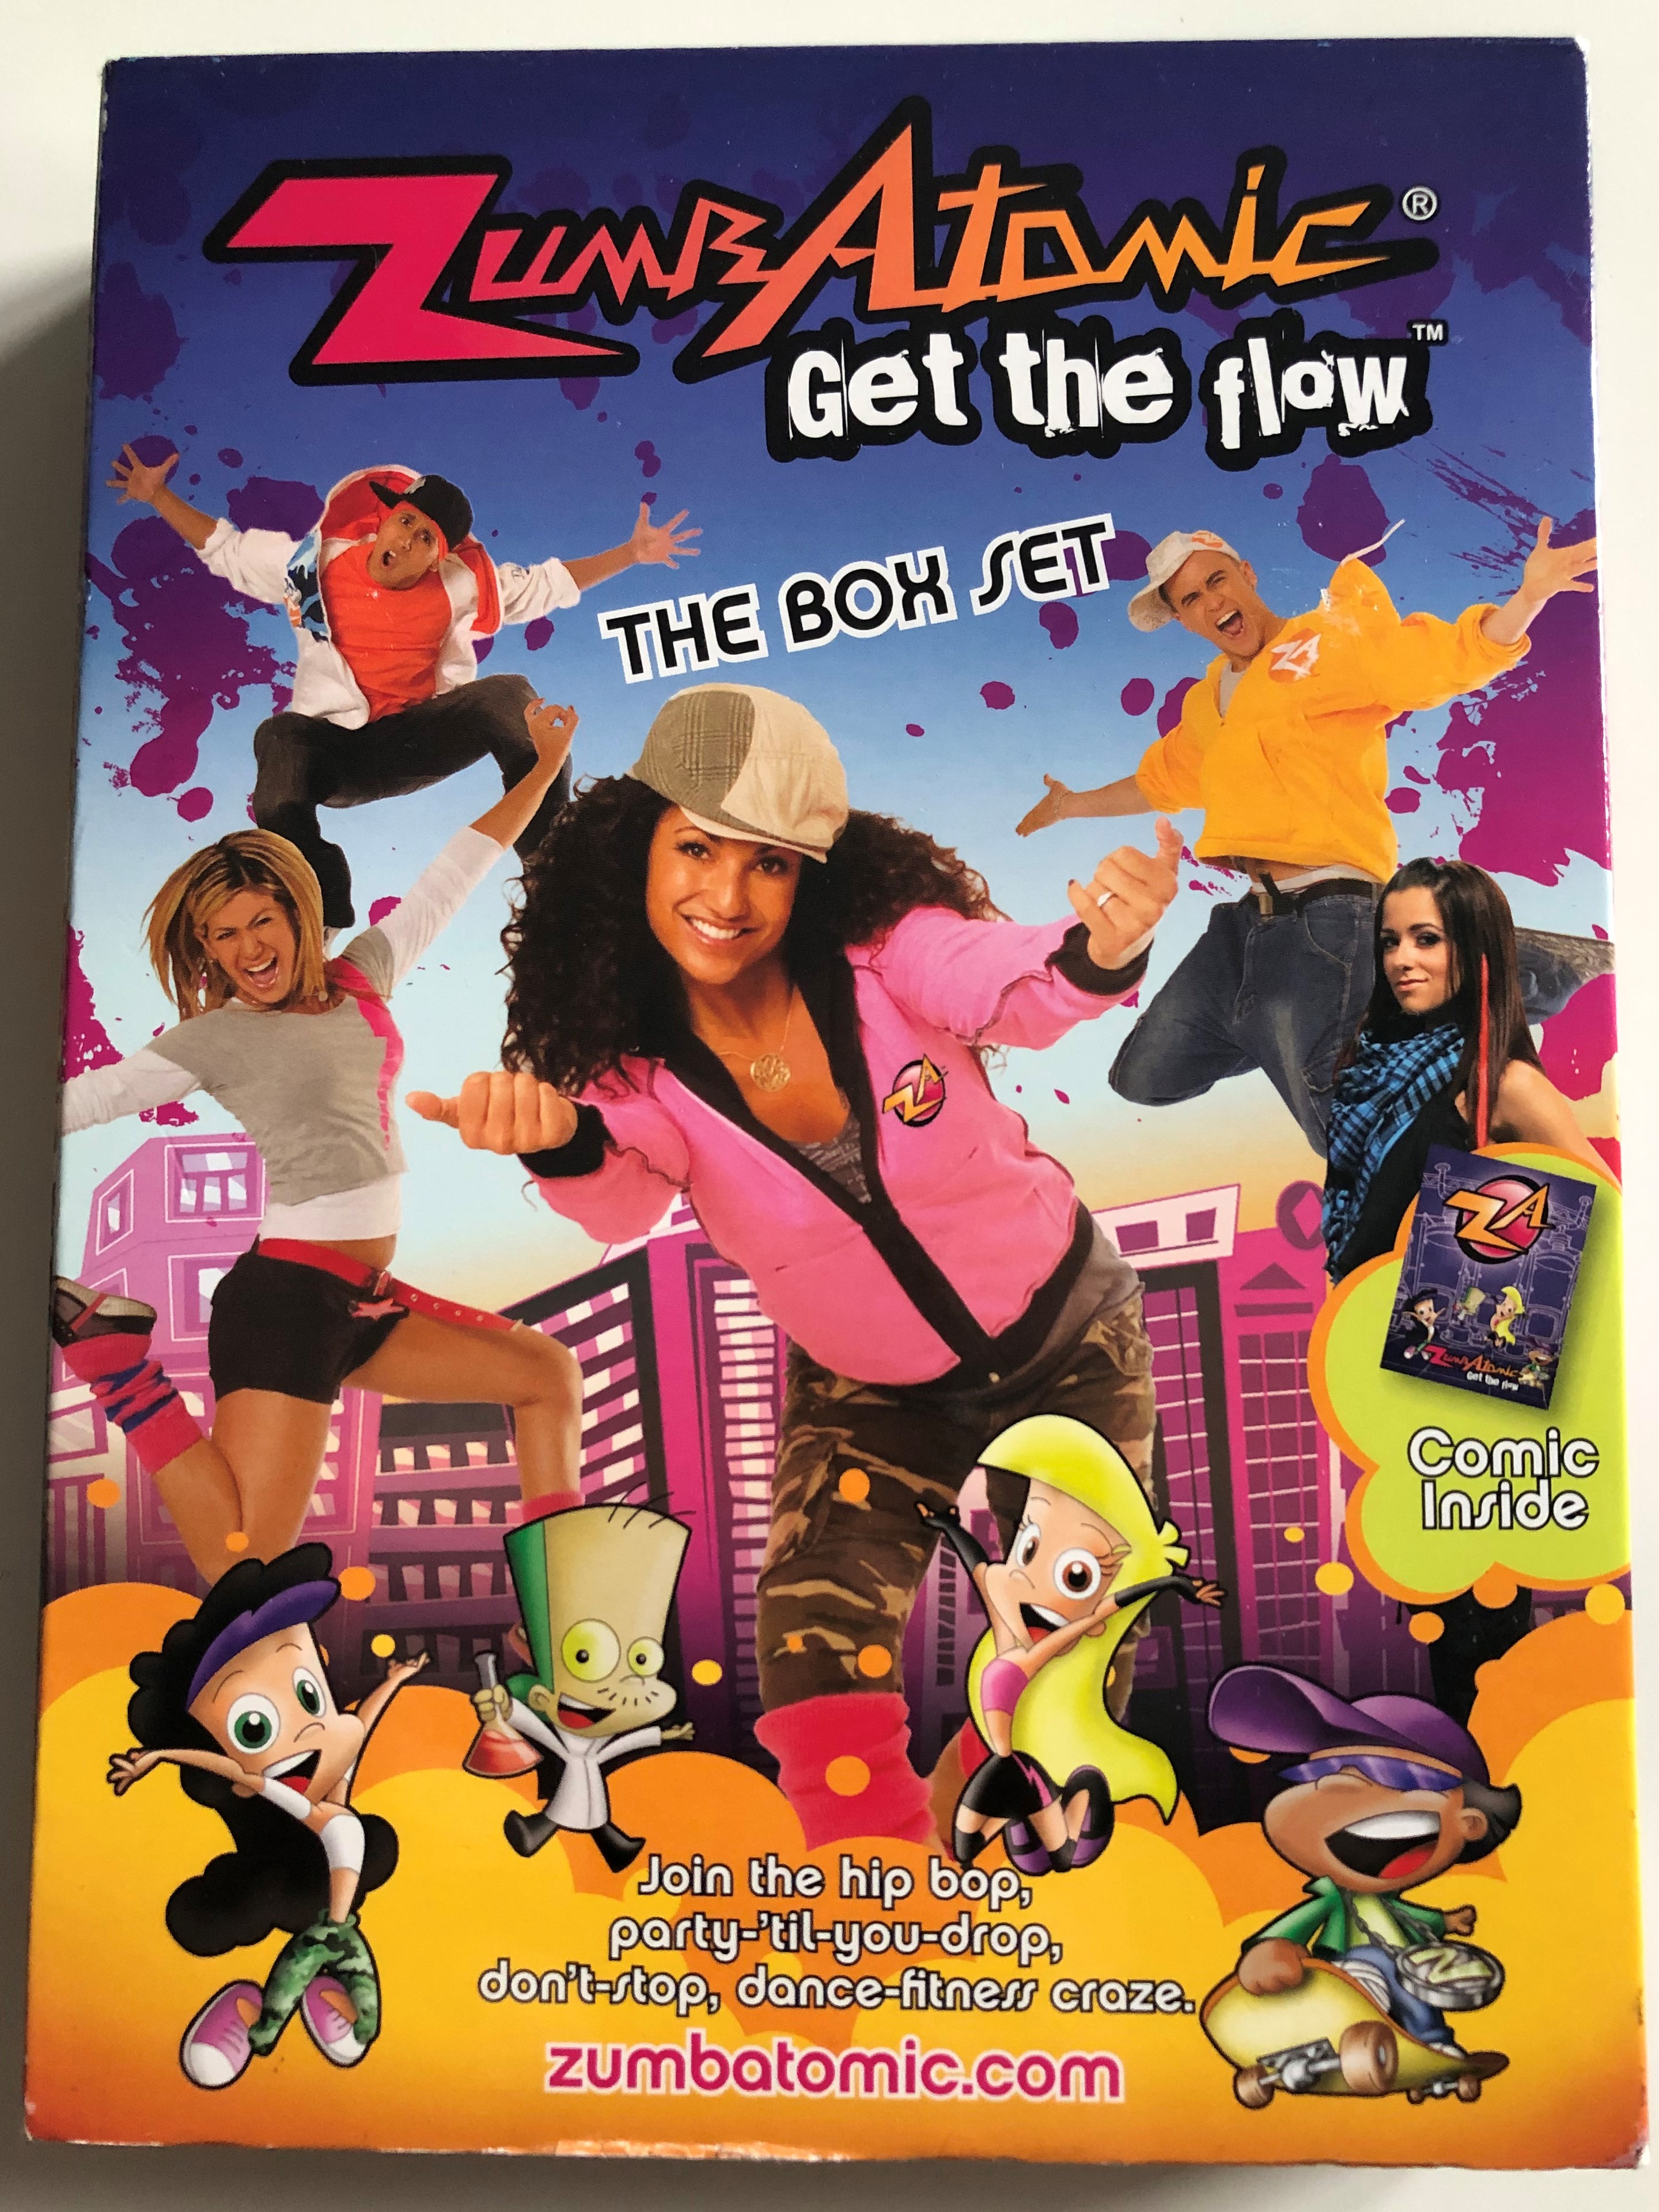 Zumbatomic - Get the flow DVD 2009 Box SET / Comic inside / Zumba fitness  Join the hip bop party-'til-you-drop / 4 Discs - bibleinmylanguage